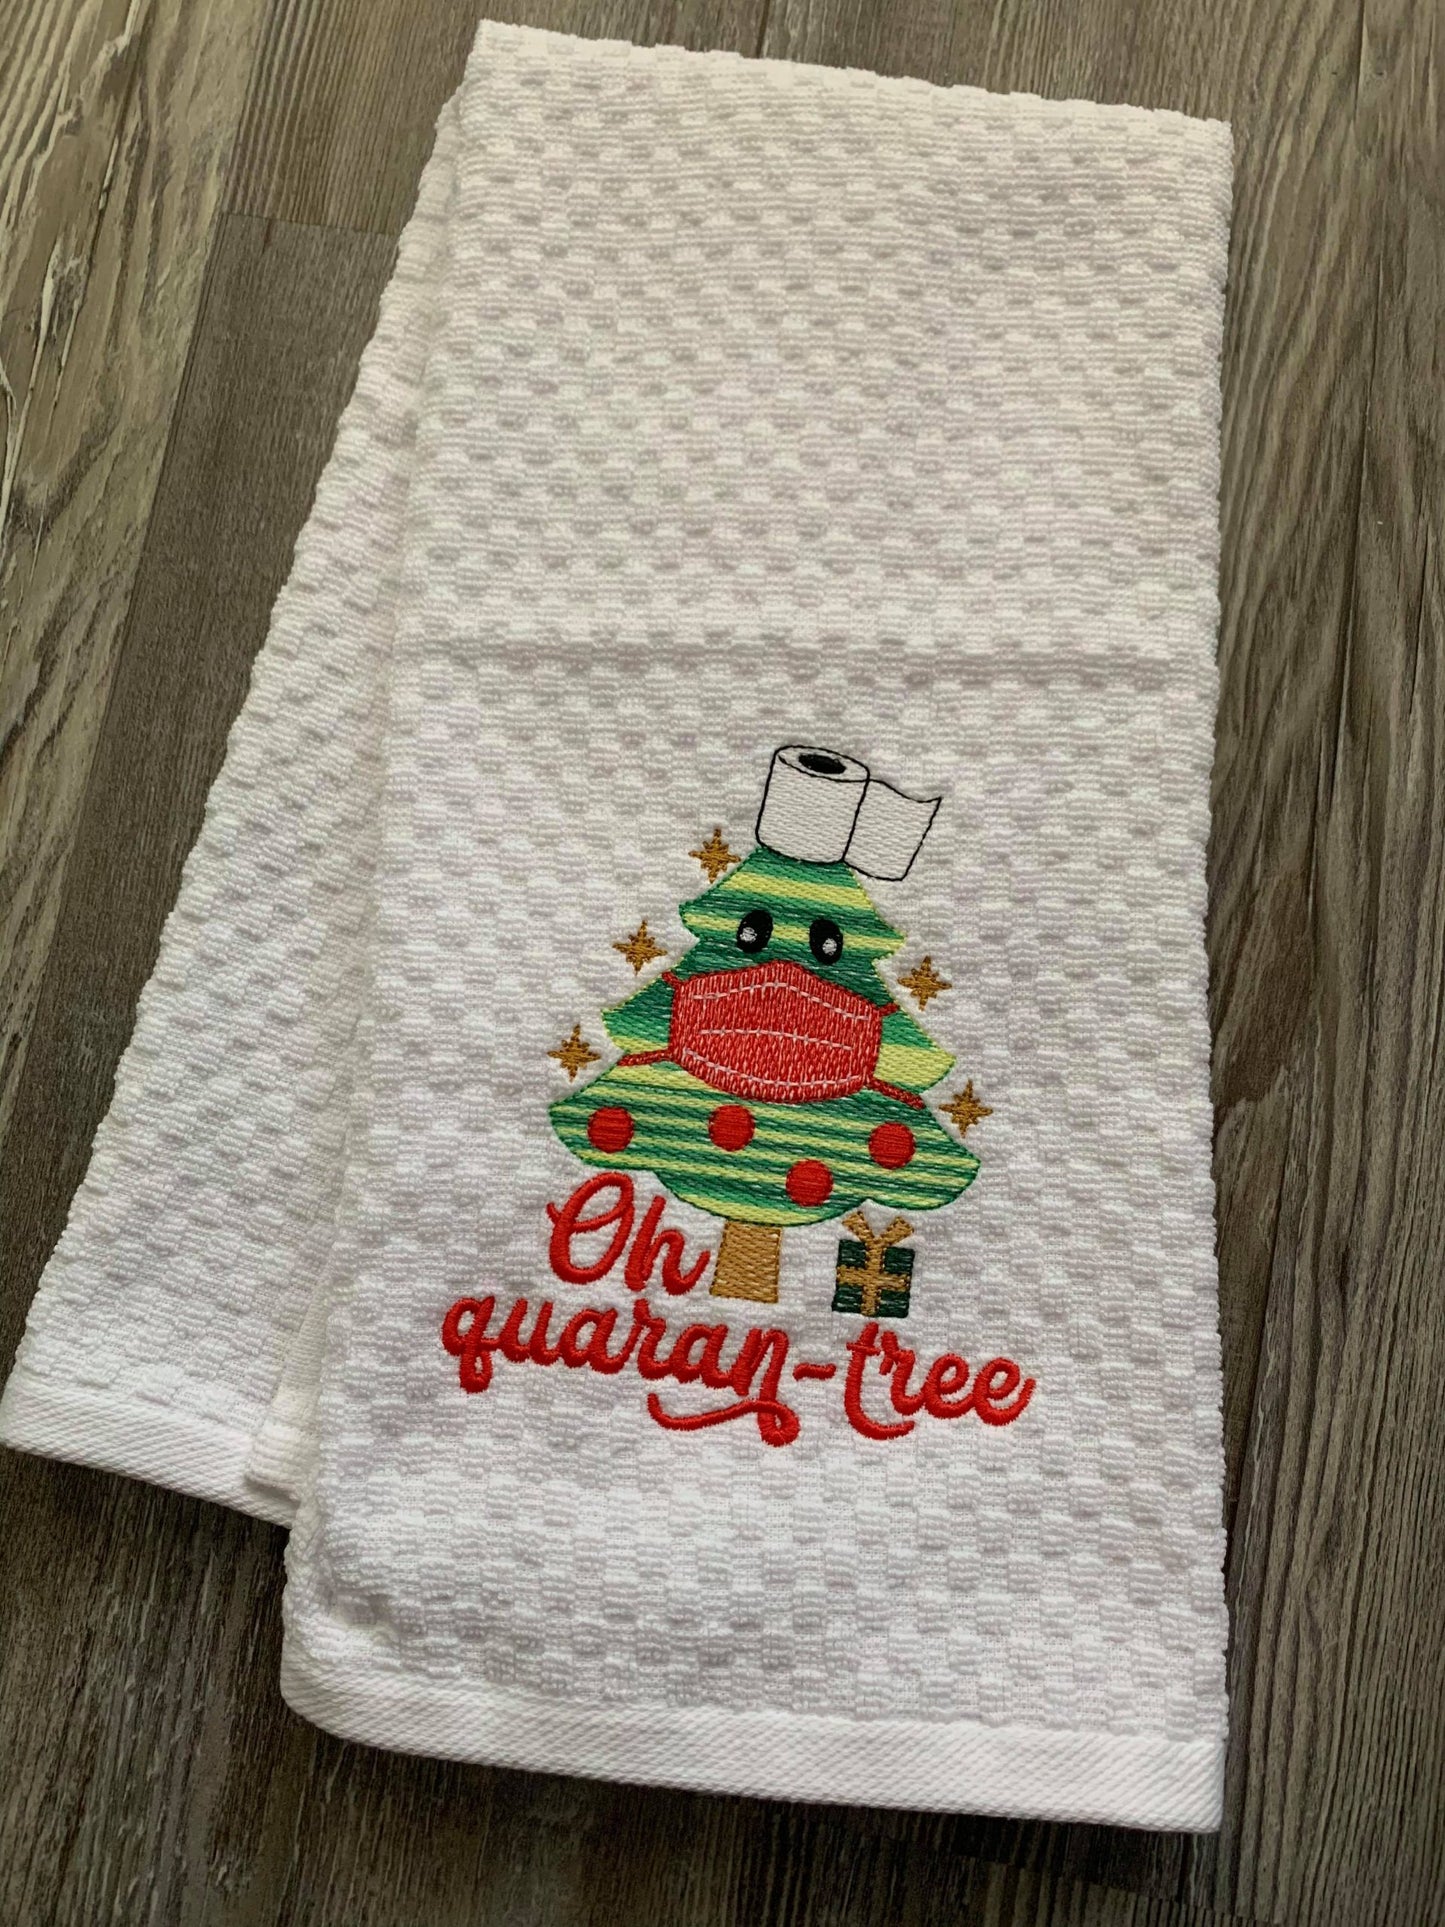 Oh Quaran-tree - 2 Sizes - Digital Embroidery Design